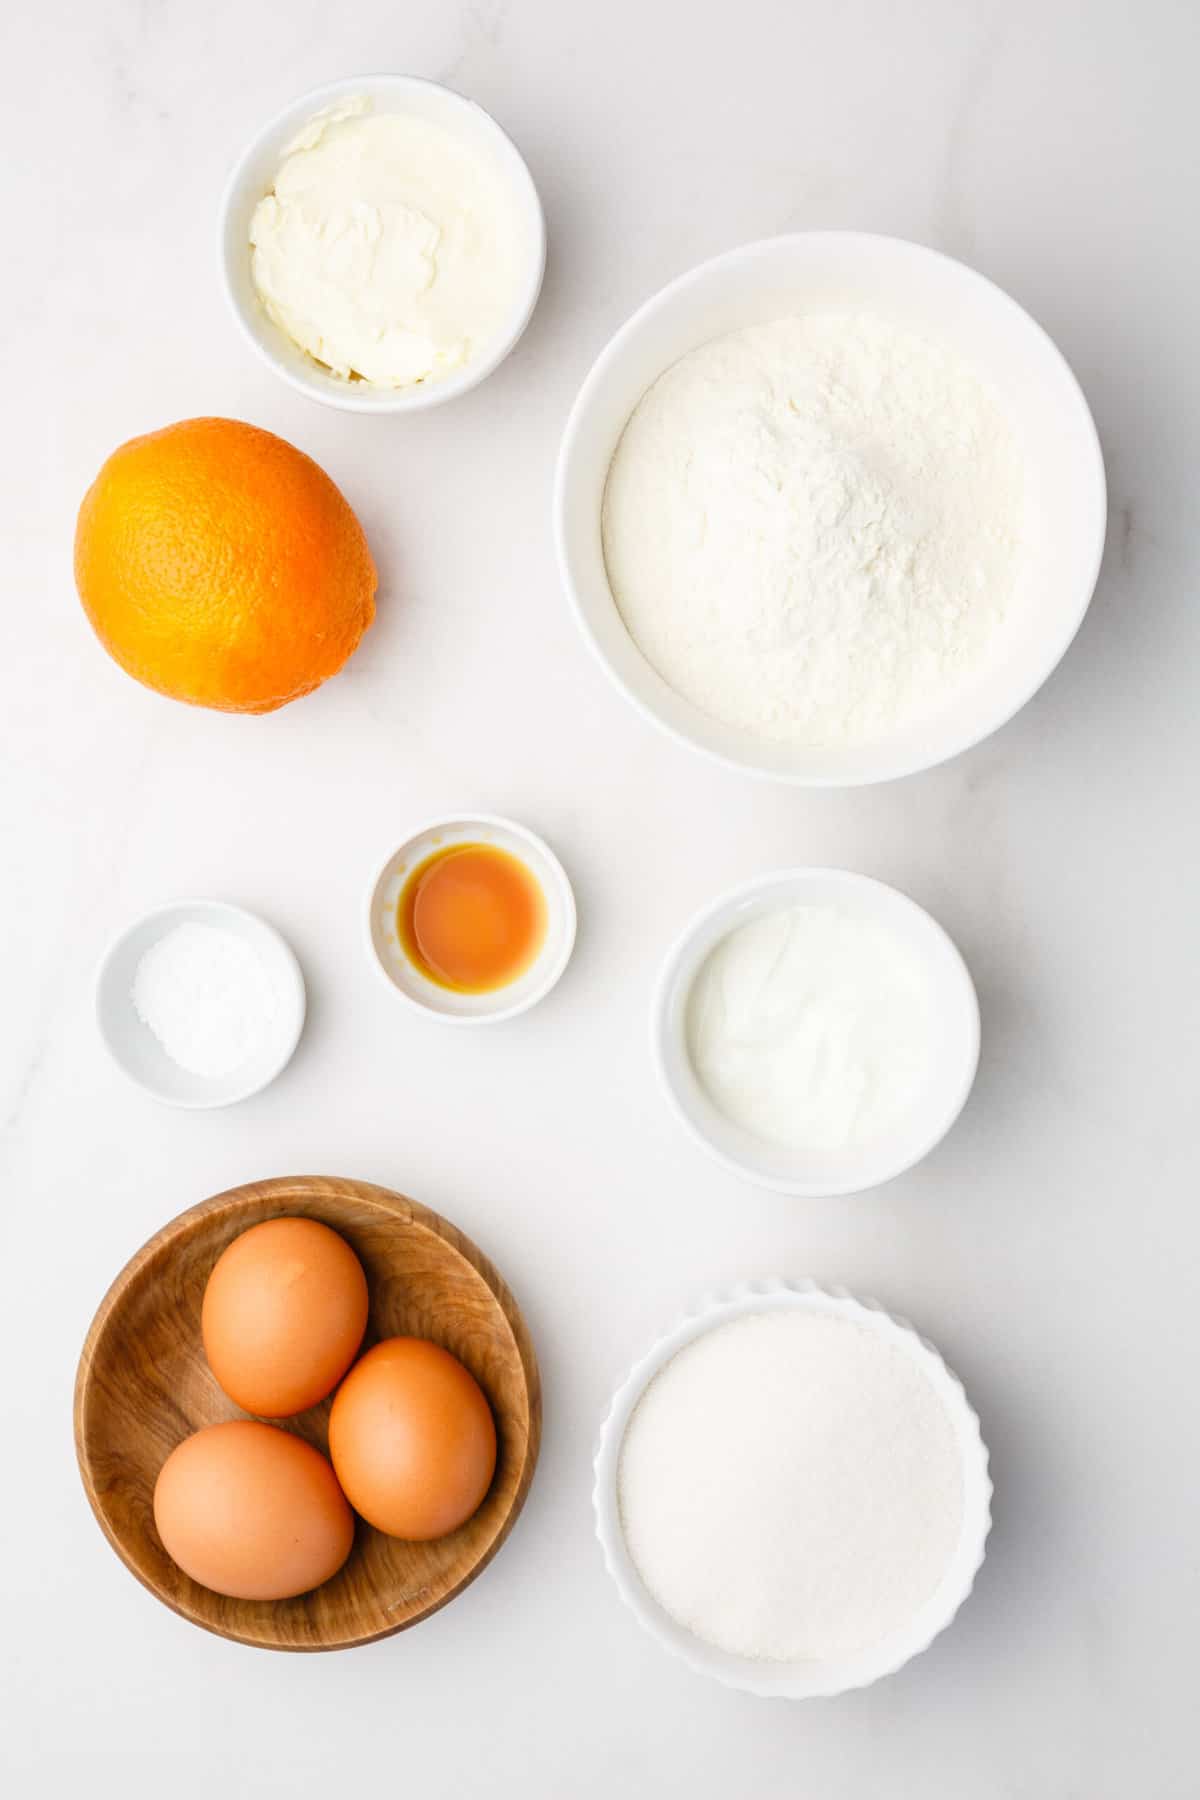 ingredients to make orange cake and orange glaze